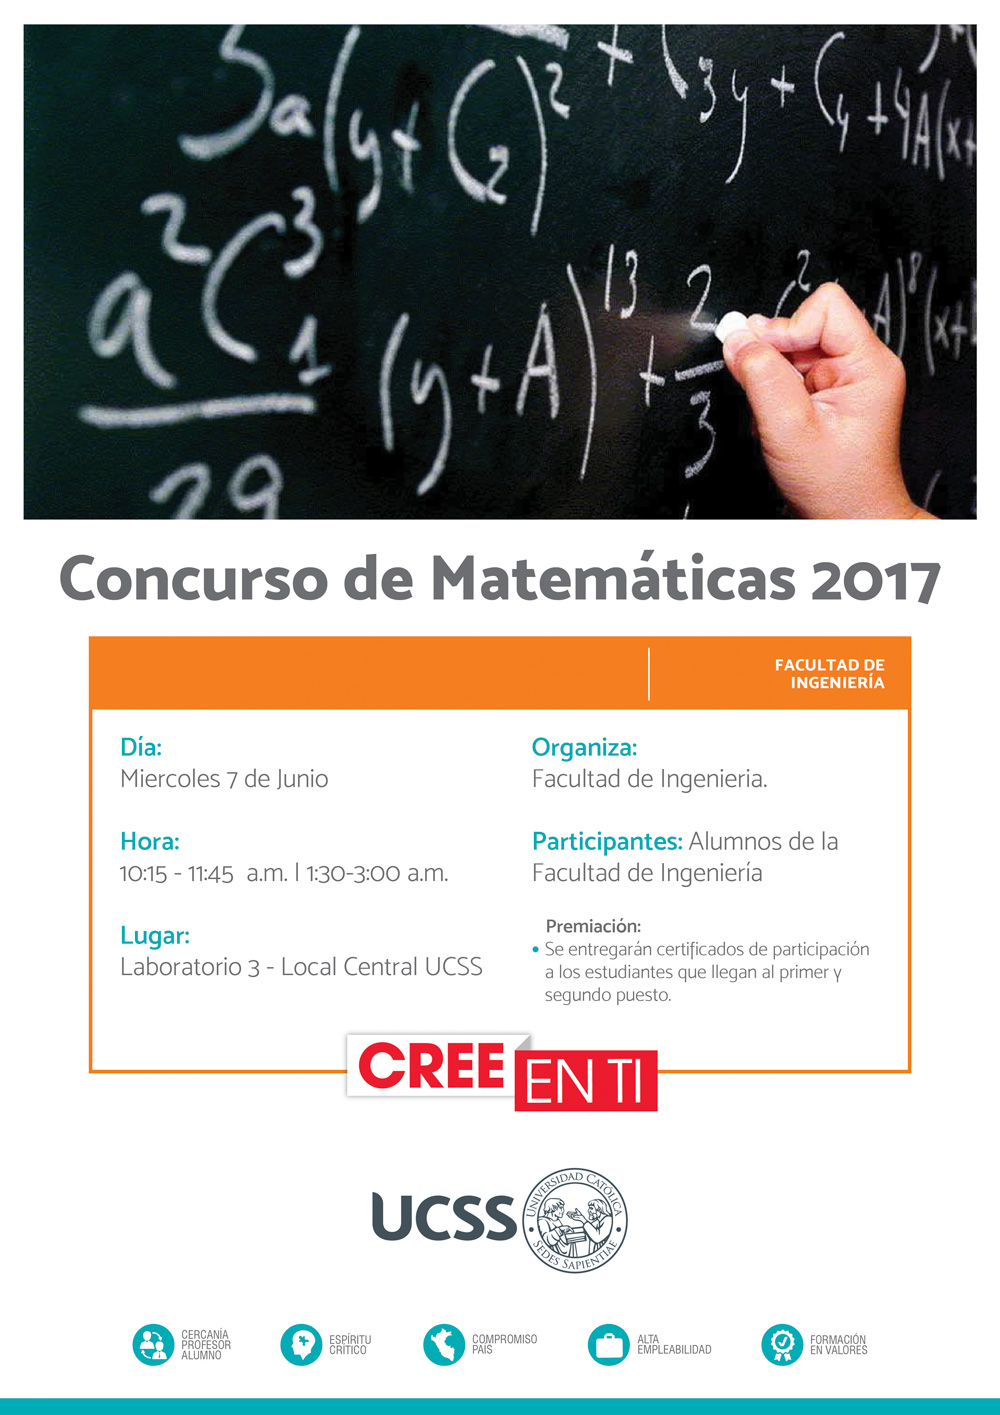 FI: Concurso de matemáticas 2017